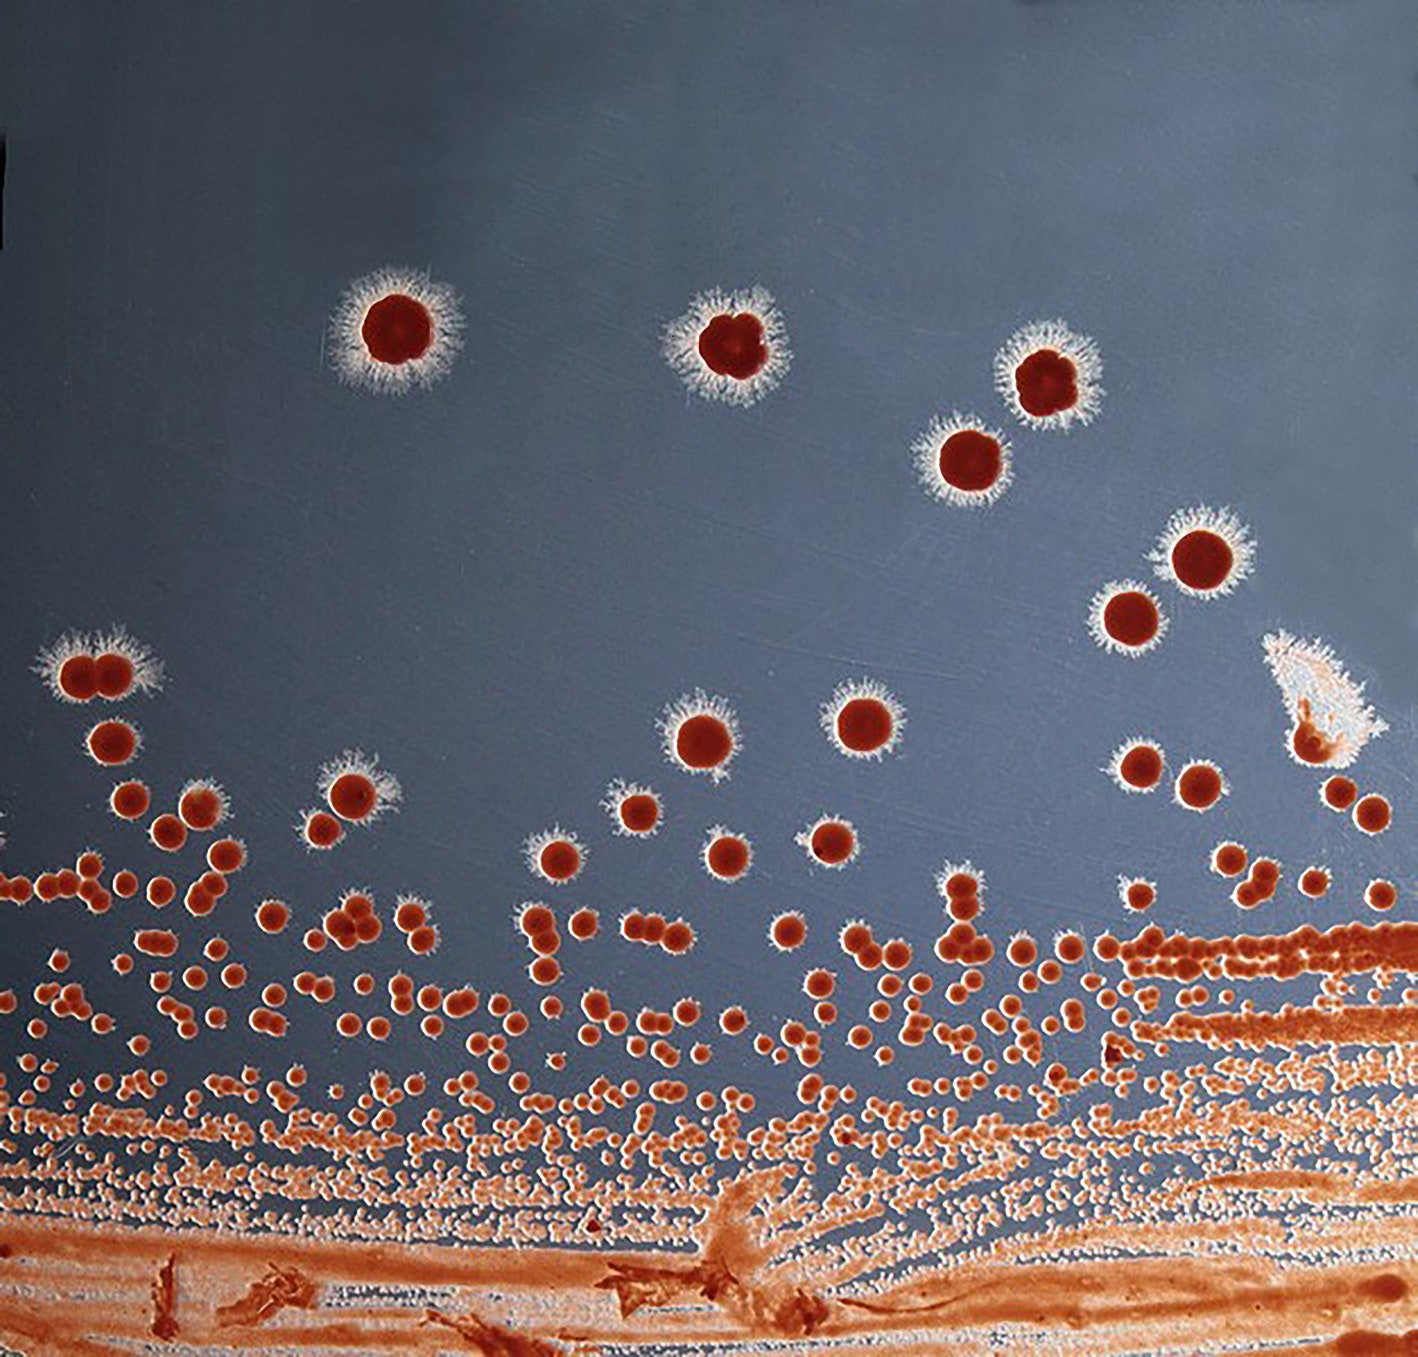 Колонии бактерий Rhodococcus rhodochrous. Фото НИЦ “Курчатовский институт”.